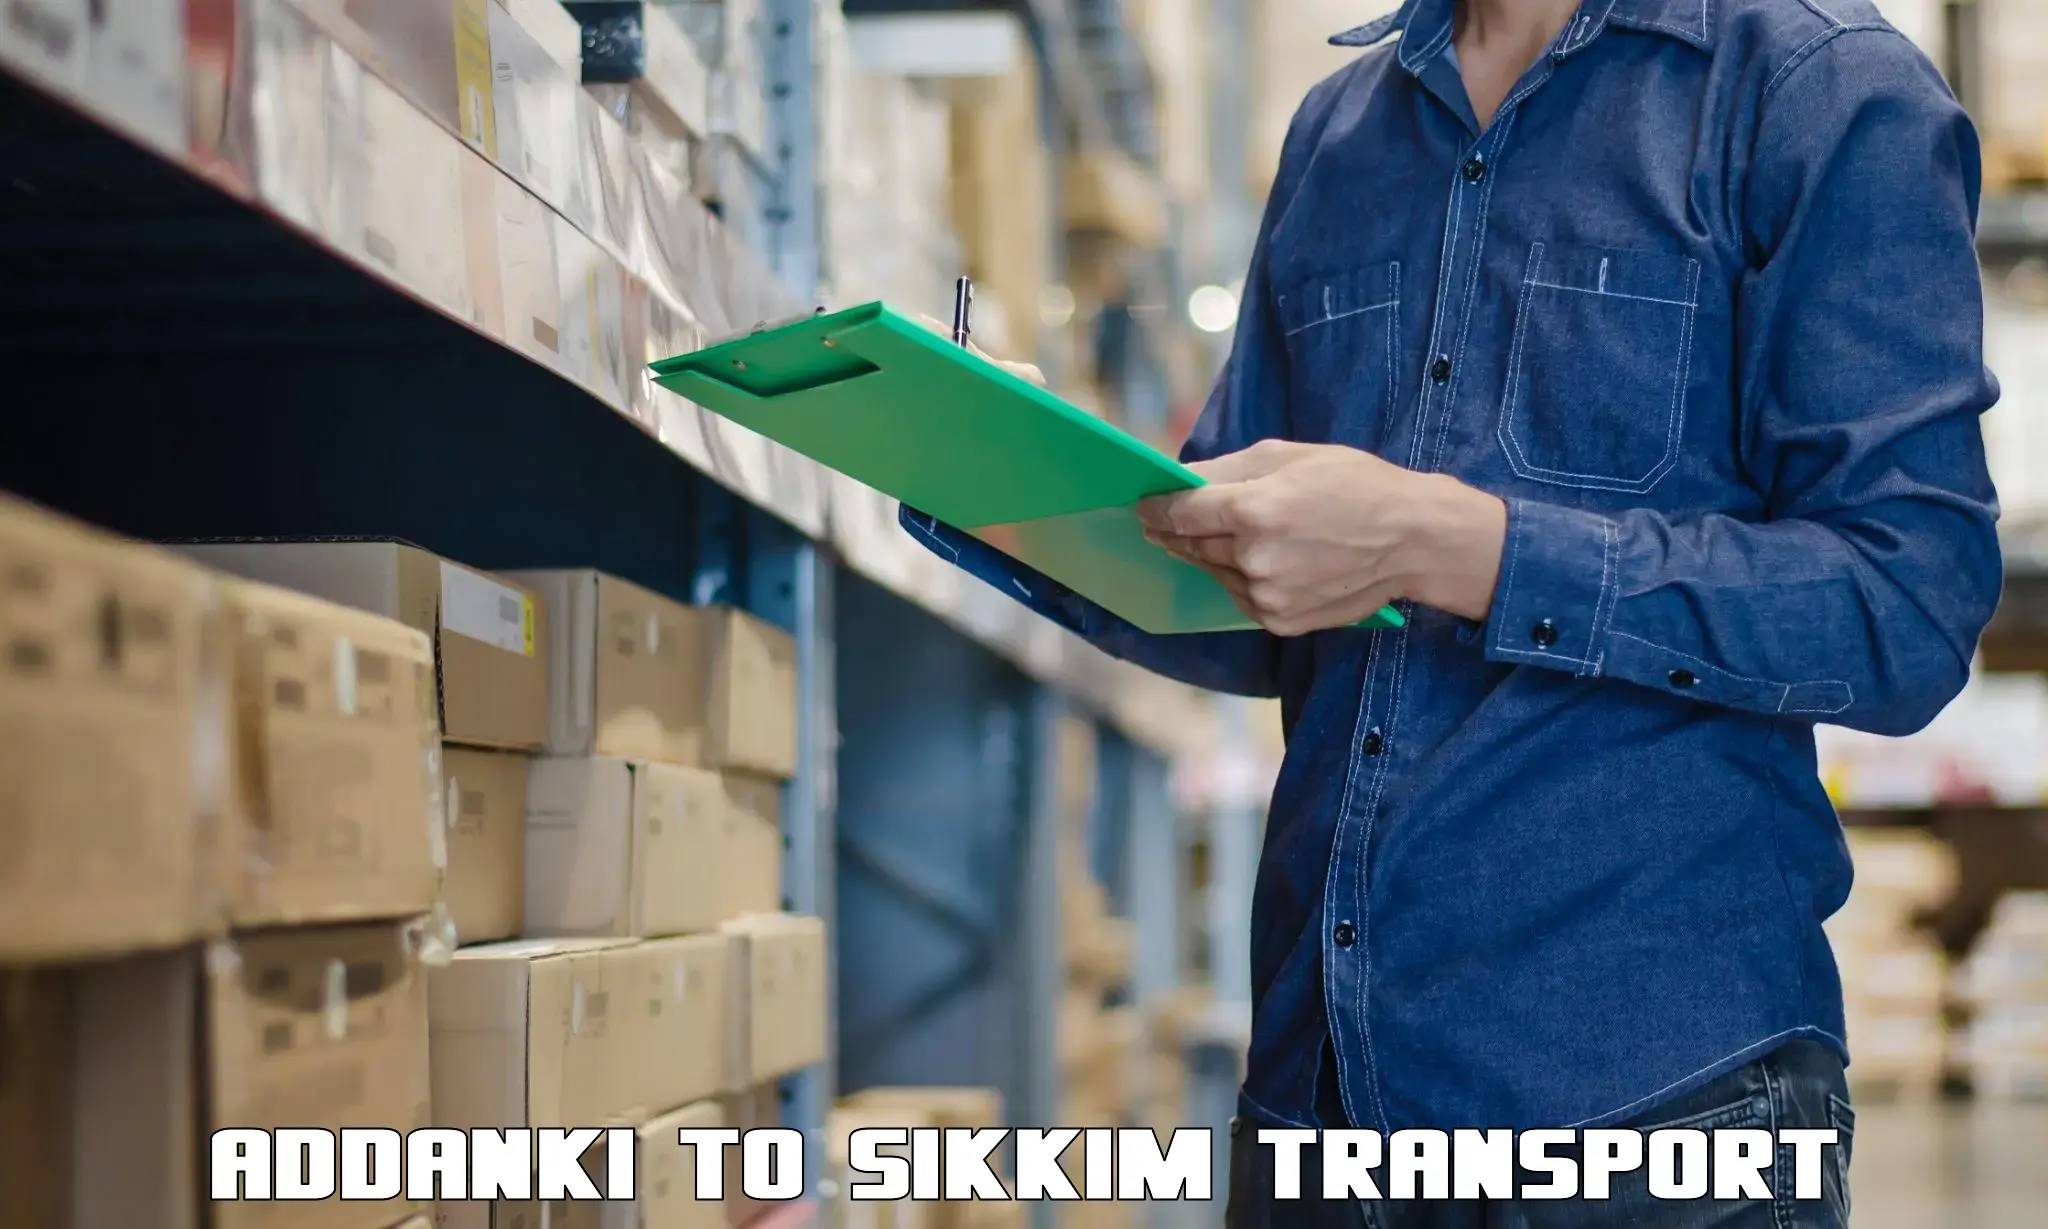 Transport in sharing Addanki to Sikkim